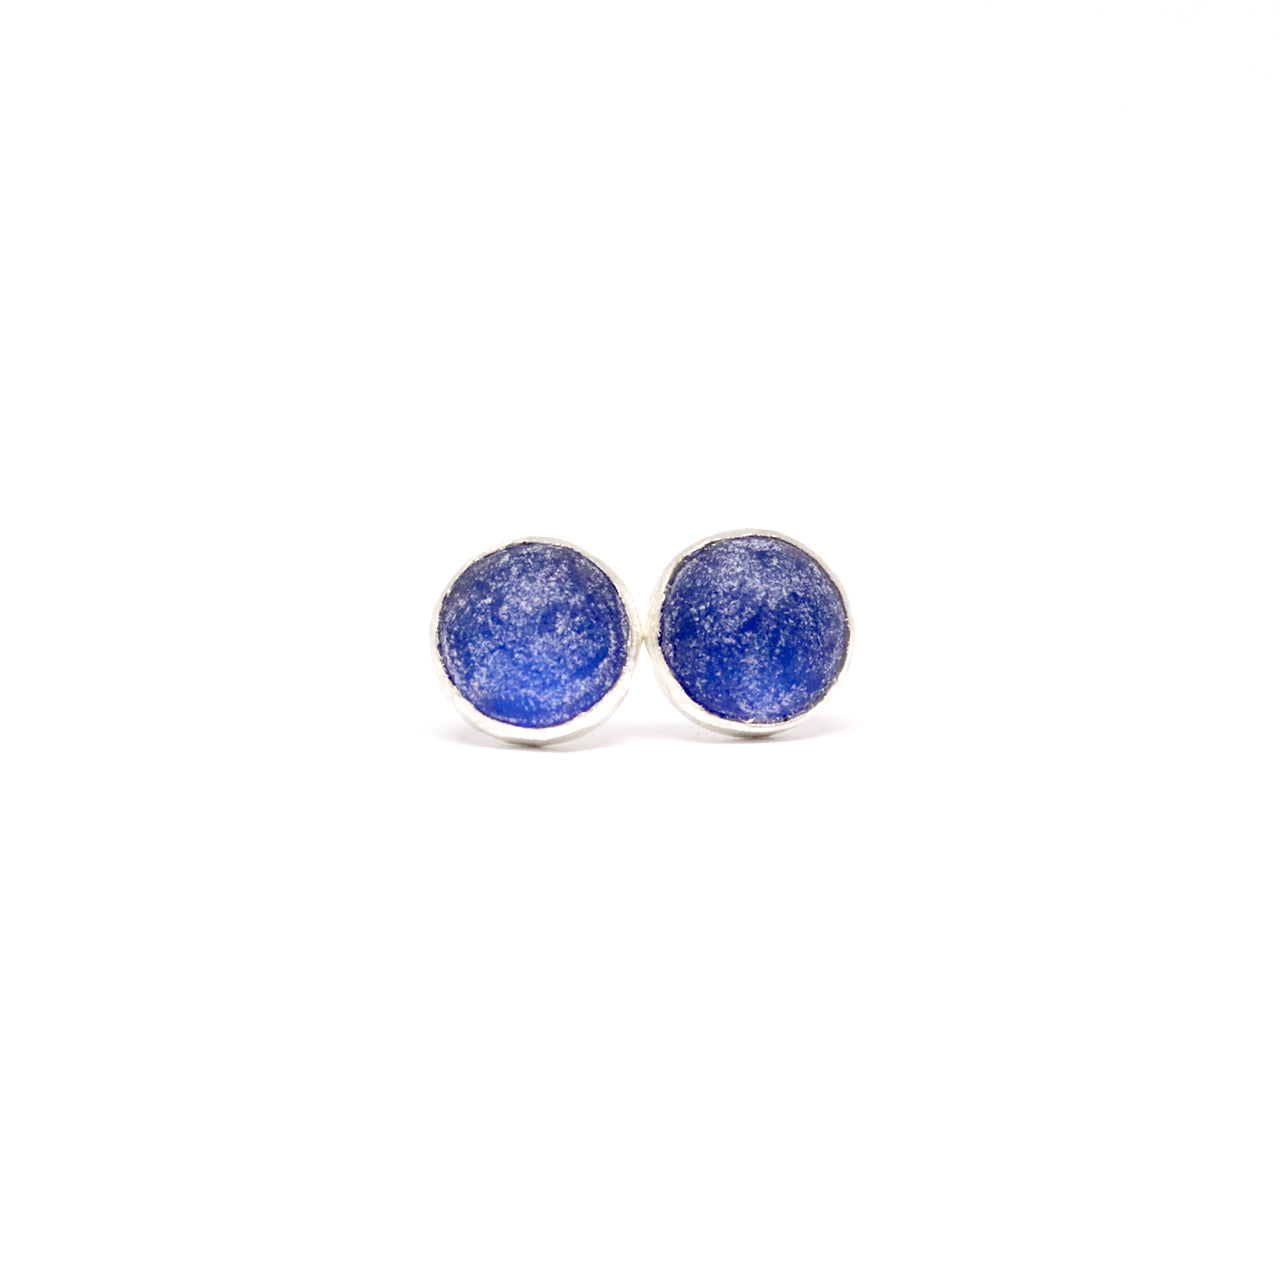 Cobalt Blue stud earrings. Hand made jewellery by Wānaka artist and jeweller Briar Hardy-Hesson.